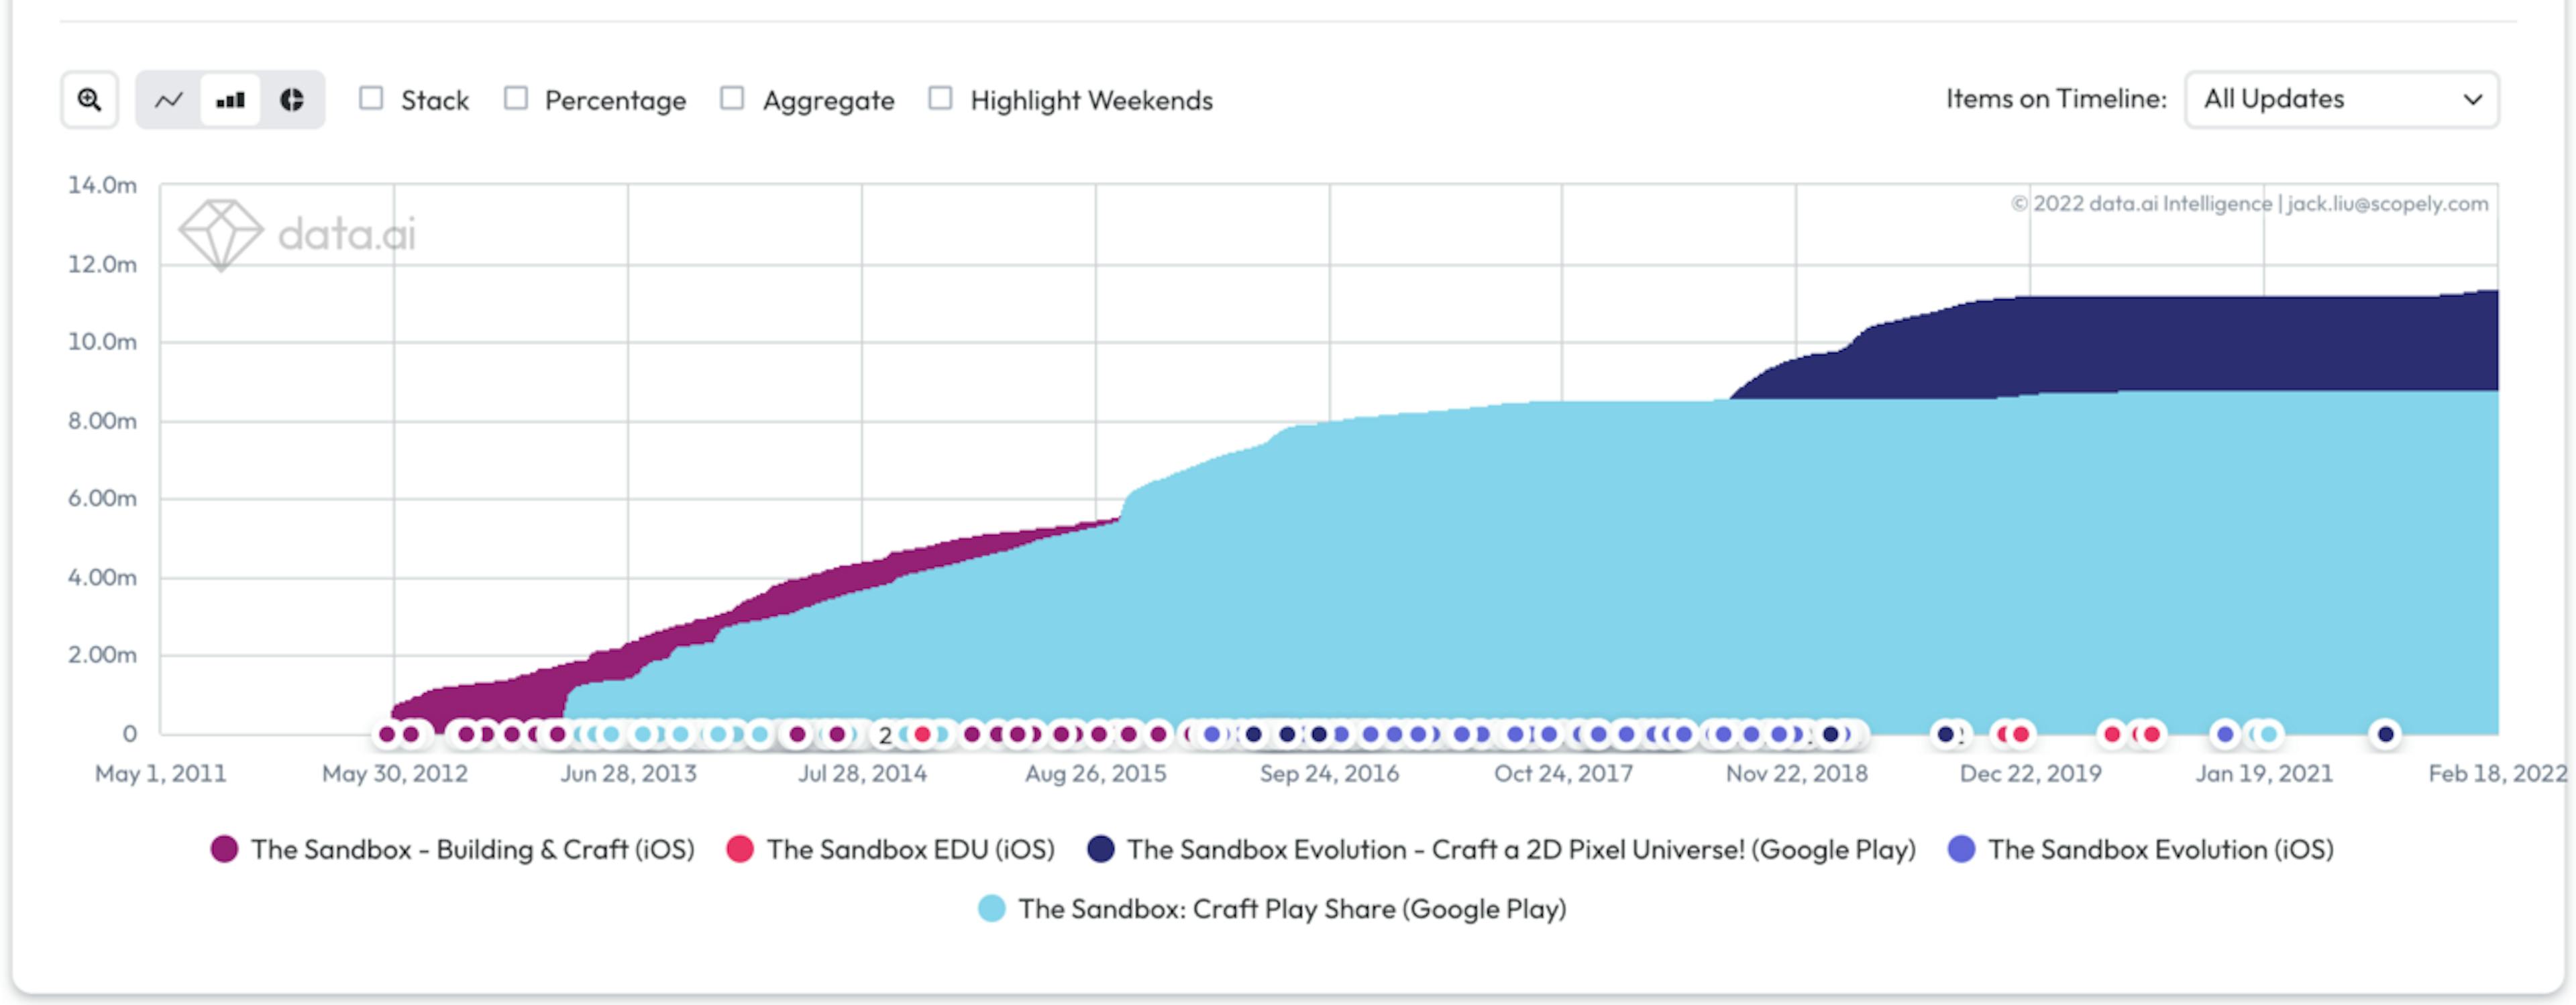 Cumulative downloads for each mobile game under The Sandbox franchise